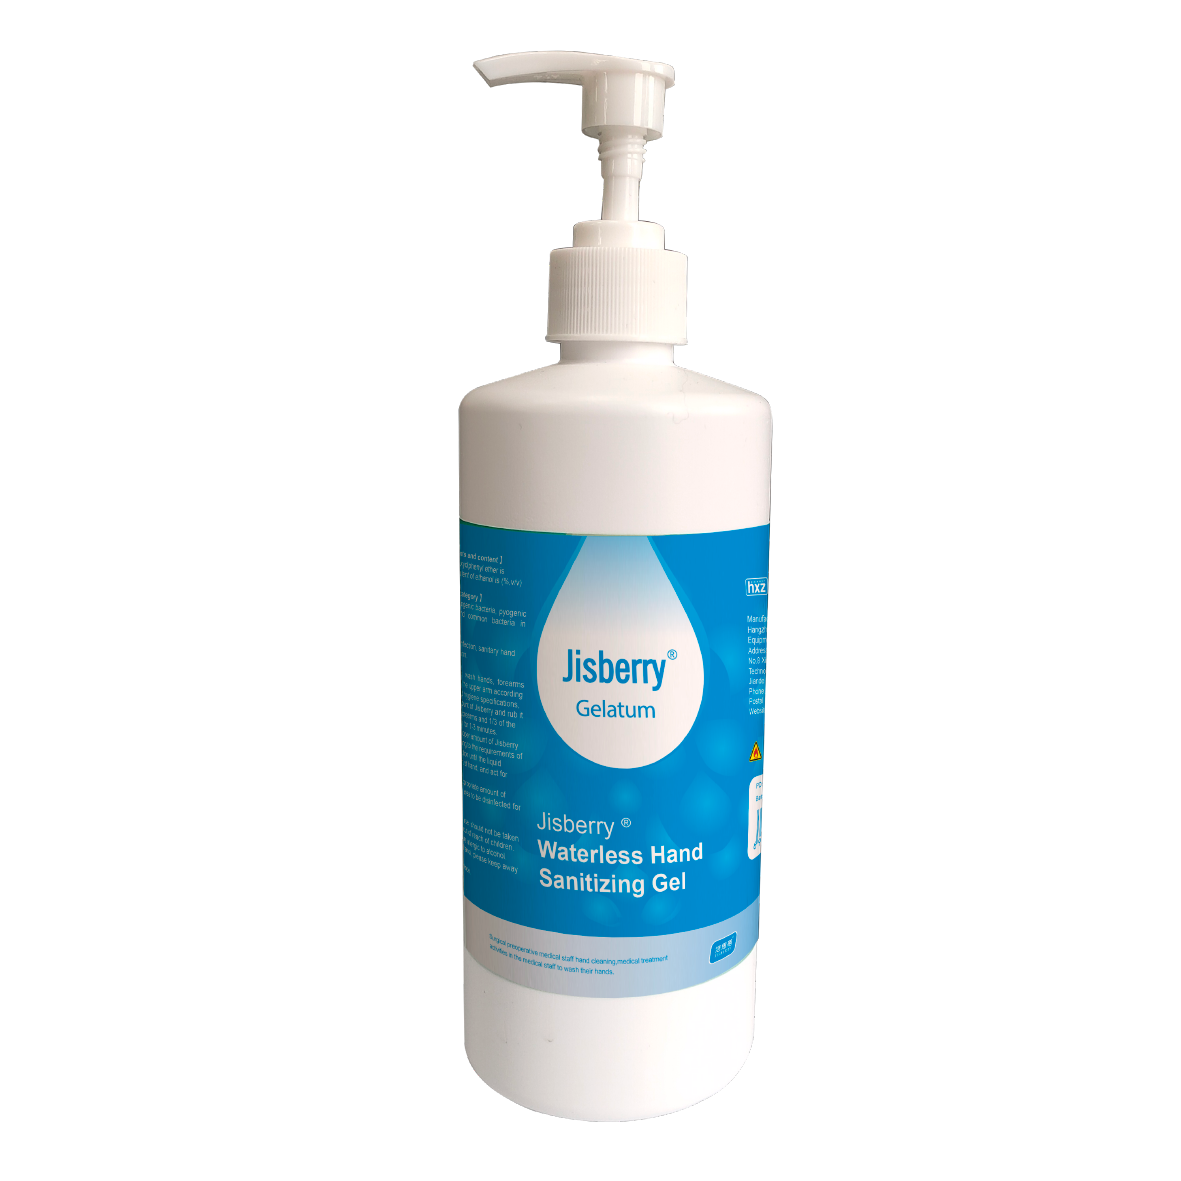 Jisberry® Waterless Hand Sanitizing Gel